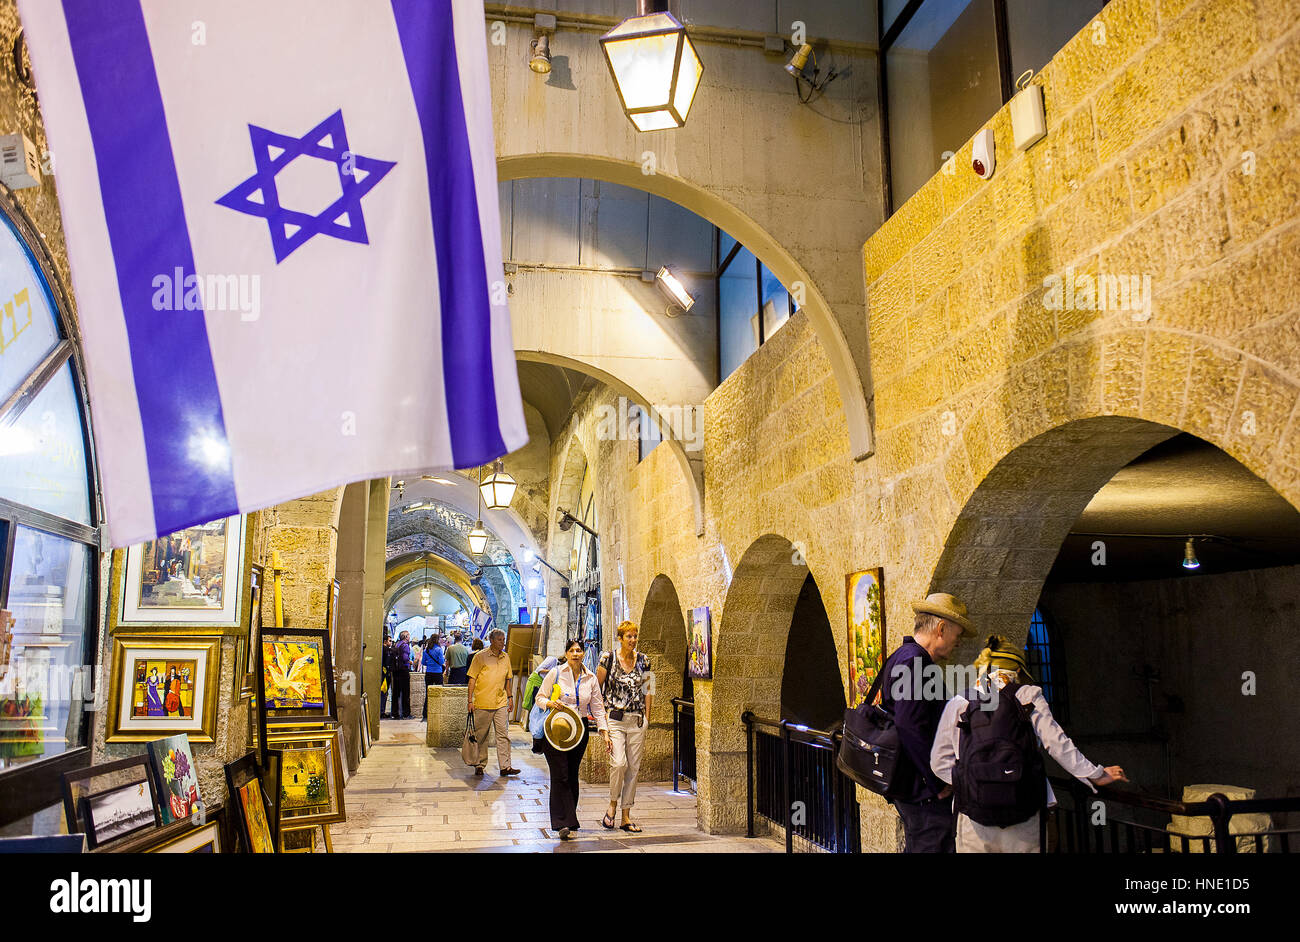 Der Cardo, Jüdisches Viertel, Altstadt, Jerusalem, Israel. Stockfoto